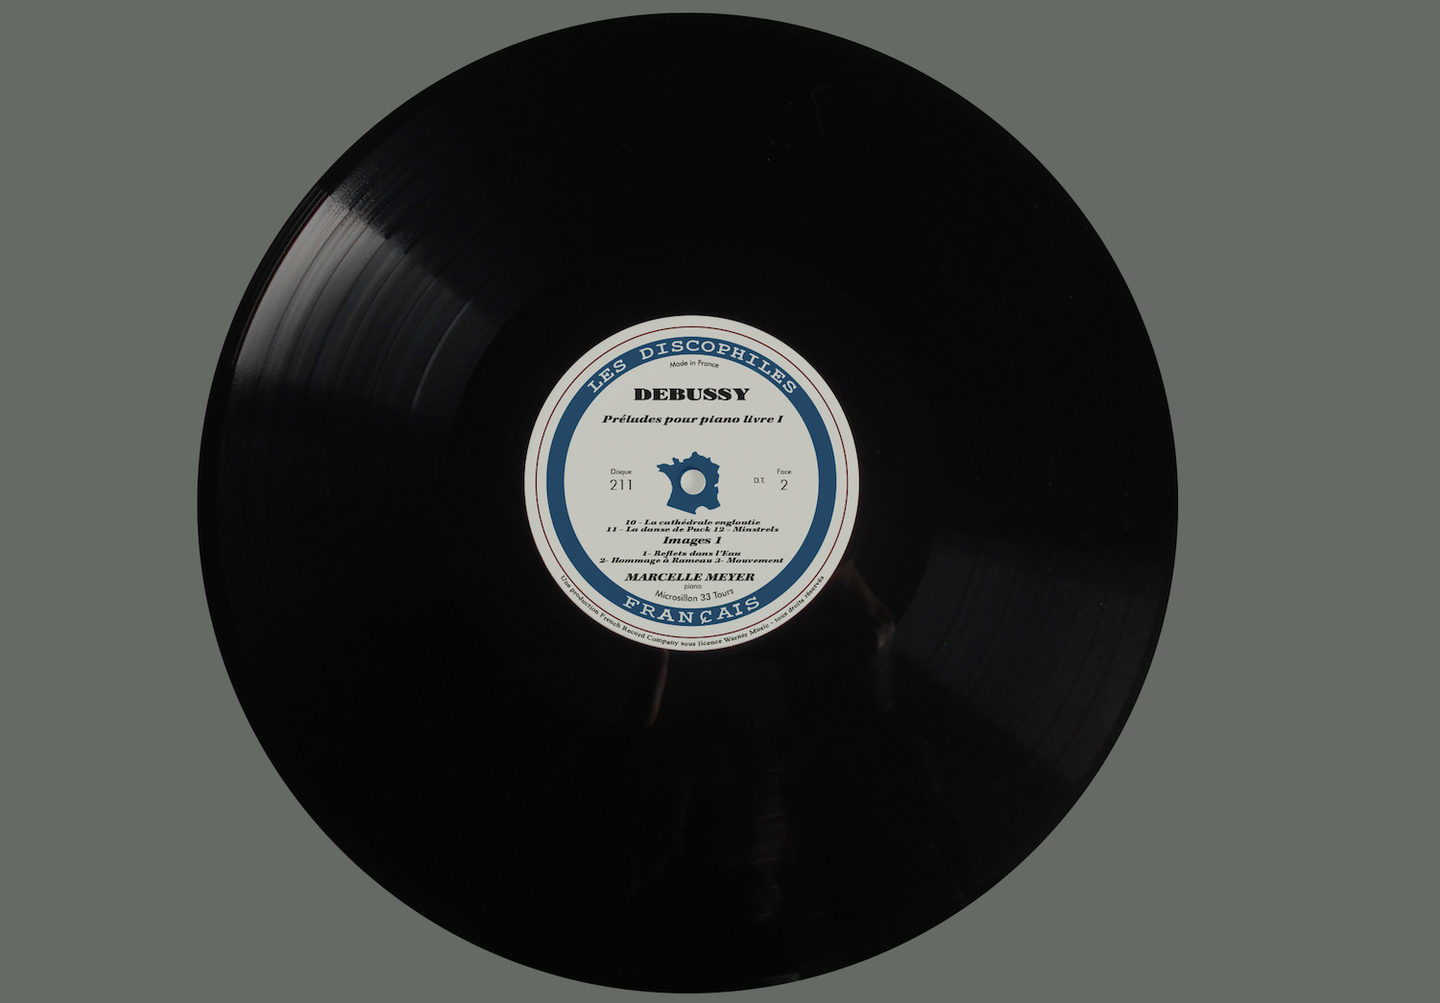 Tennessee LP альбом. Пластинки record Company Dark Horse. Итальянские альбомы LP цена.